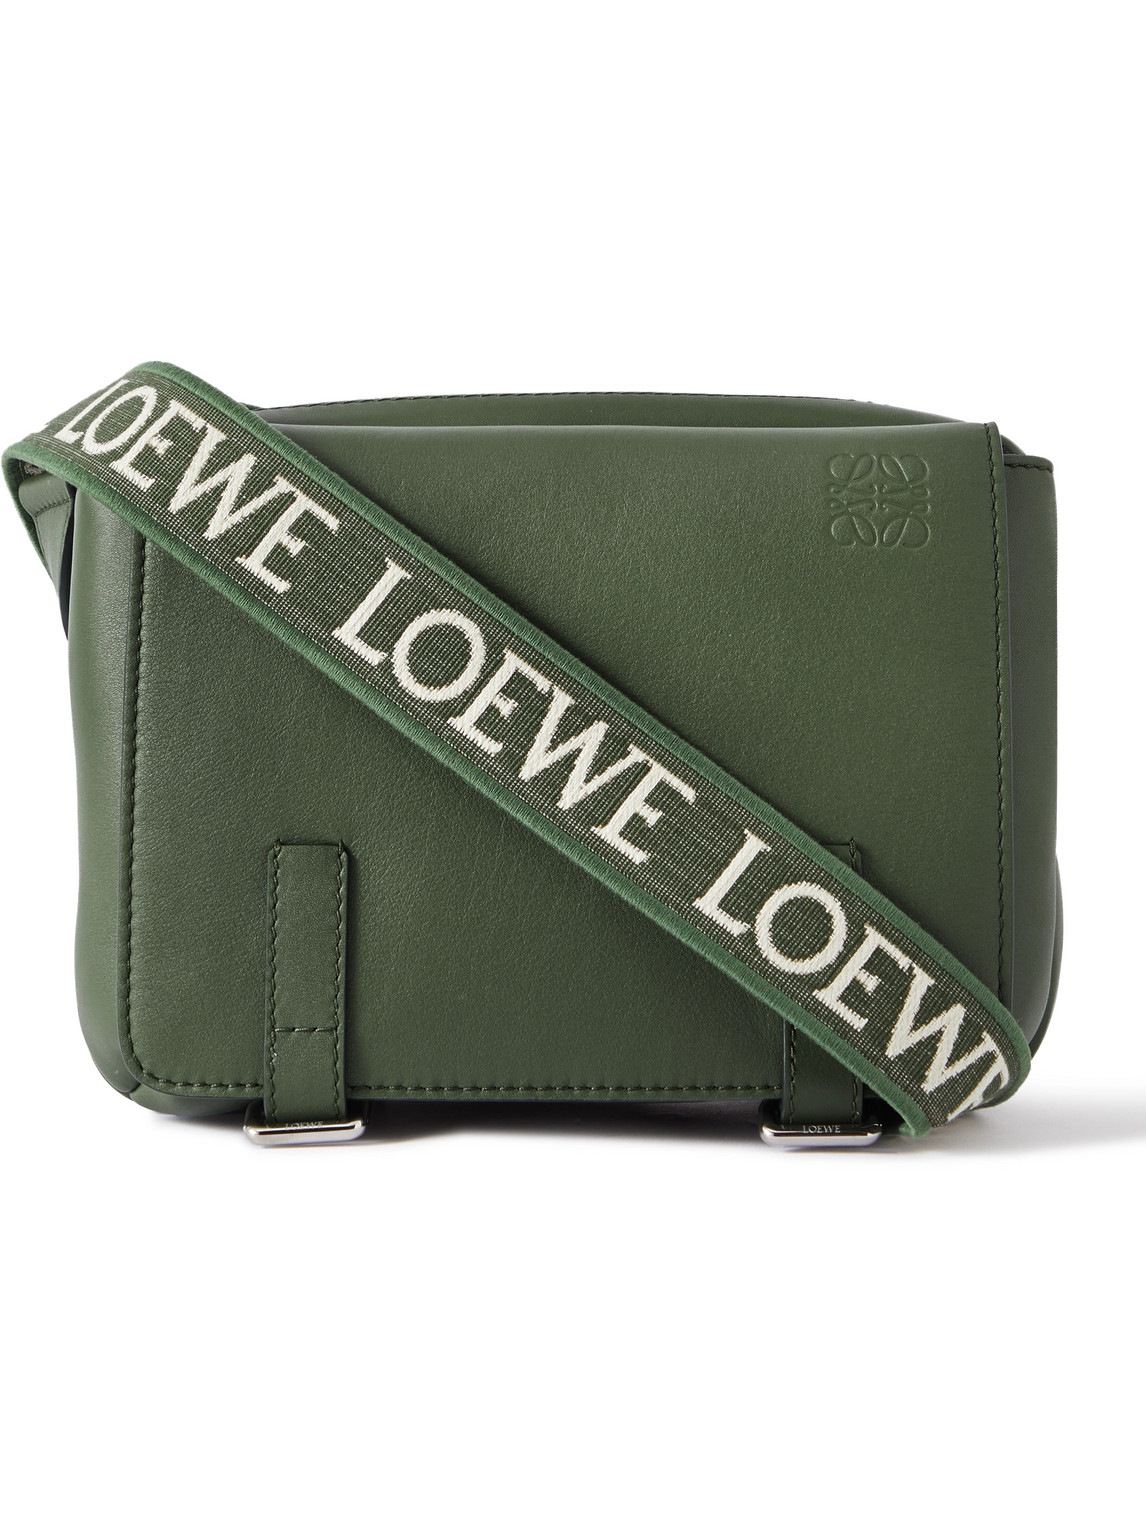 LOEWE - Military Leather Messenger Bag - Men - Green von LOEWE